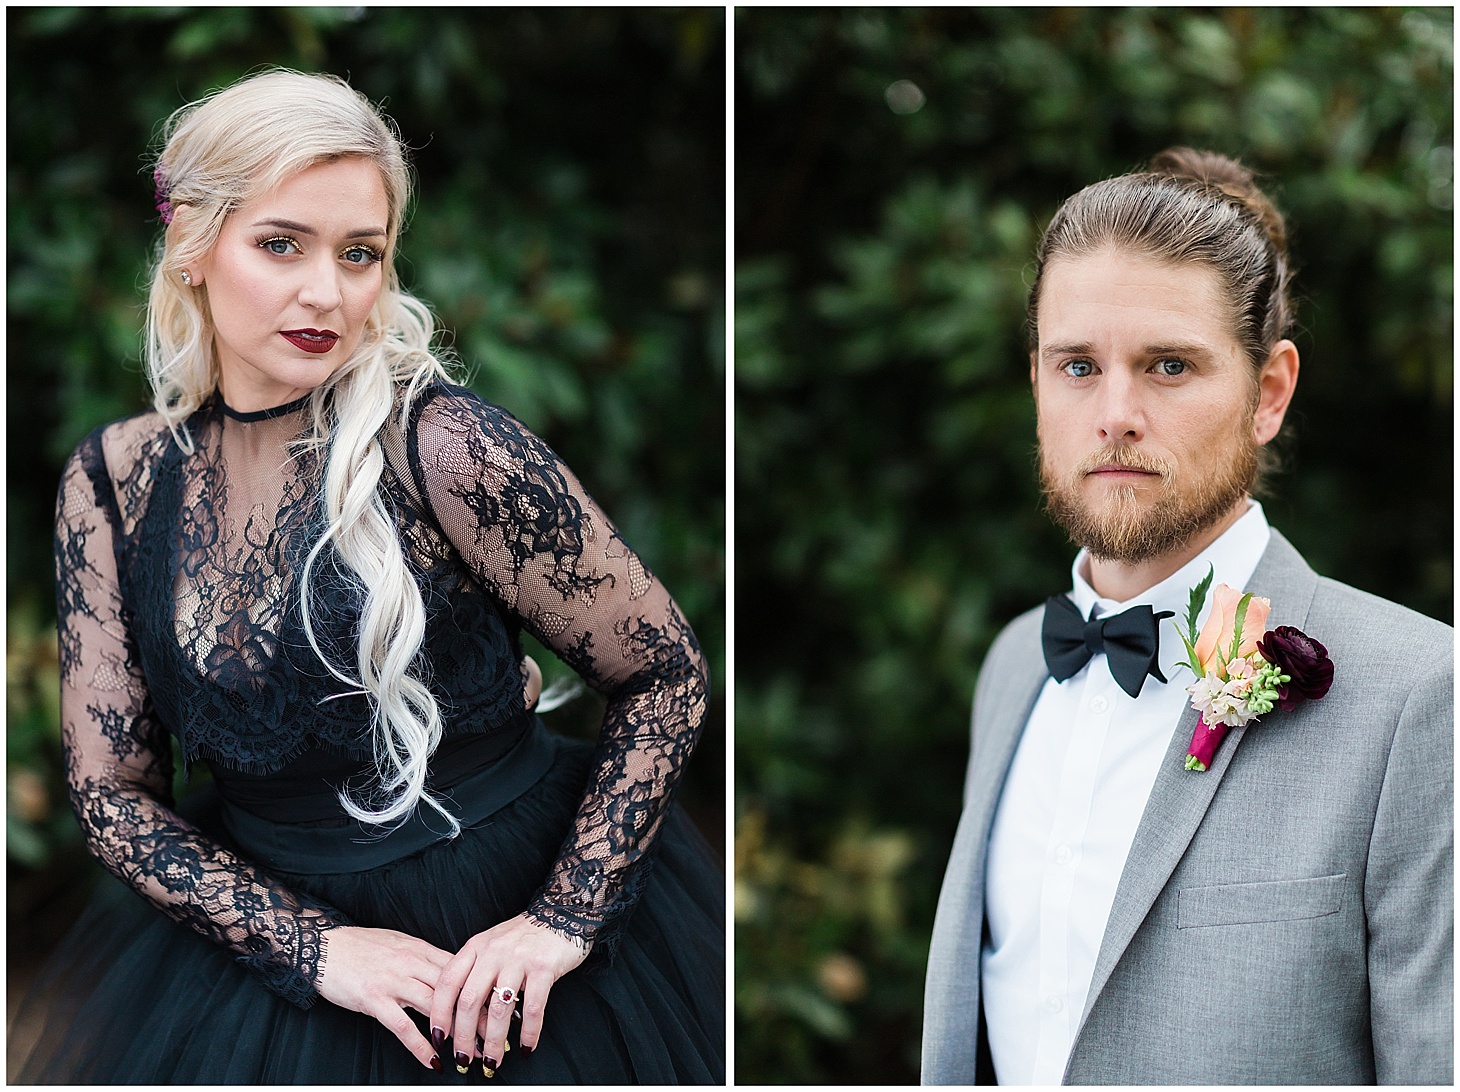 Wedding Portraits at River Farm in Alexandria, VA | Black and Red Gothic-Inspired Wedding Editorial | Sarah Bradshaw Photography